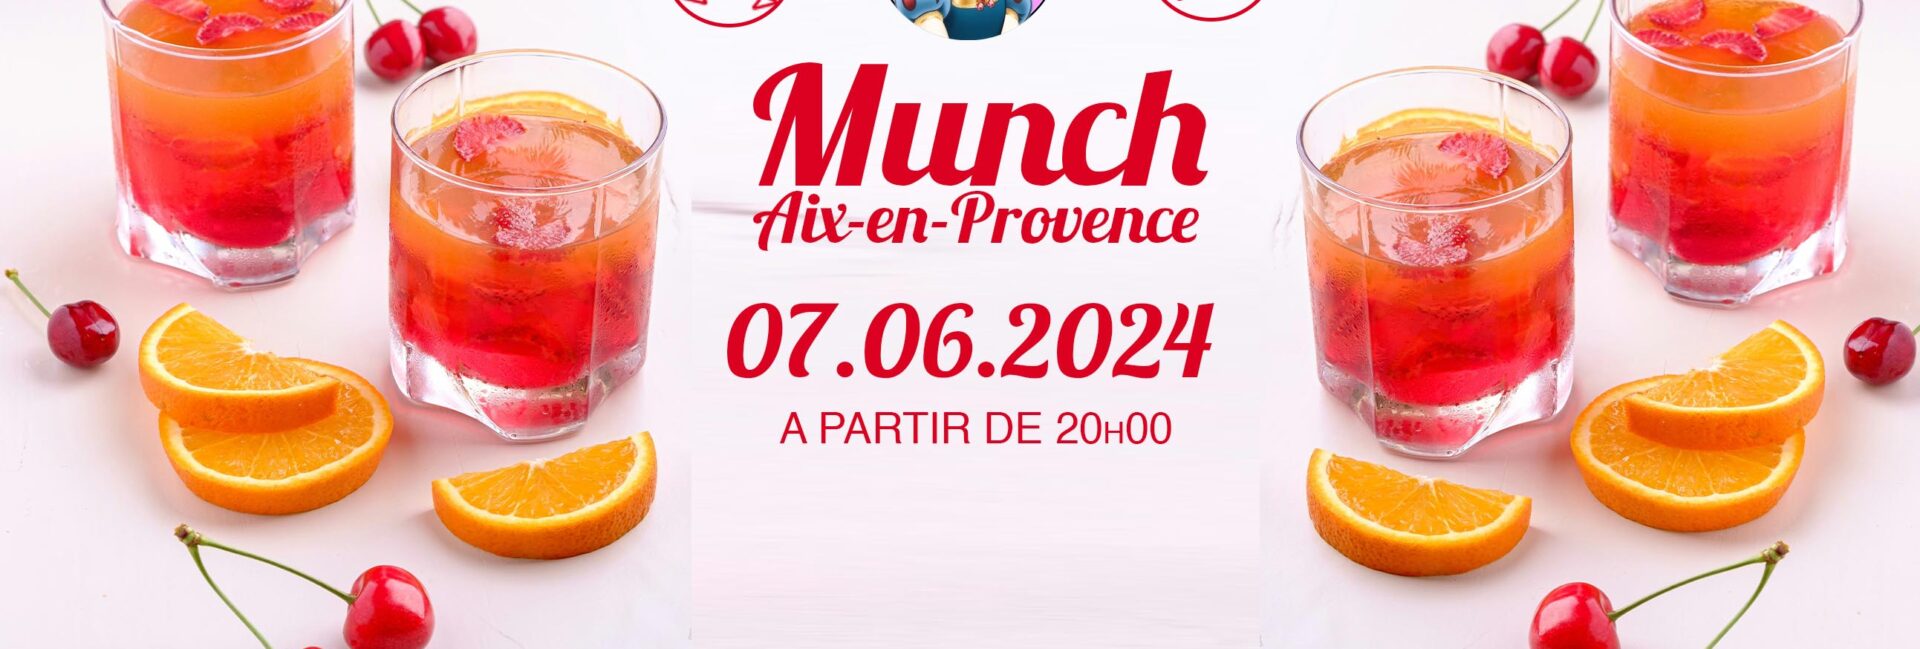 Munch aix en provence juin 2024